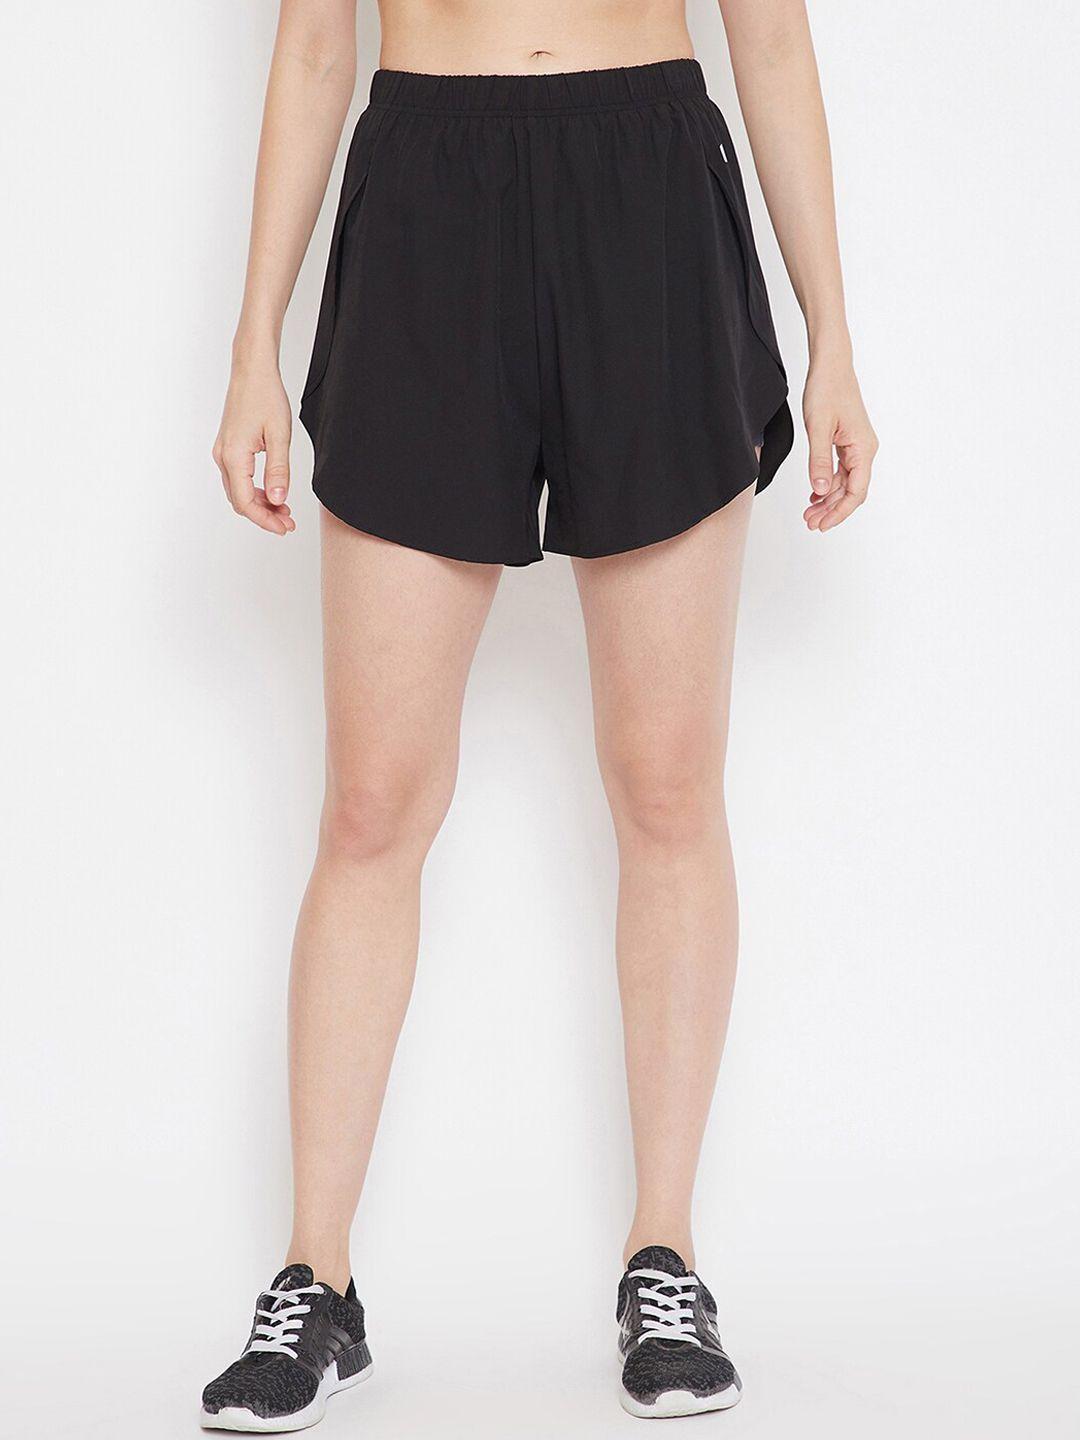 clovia women black mid-rise sports shorts